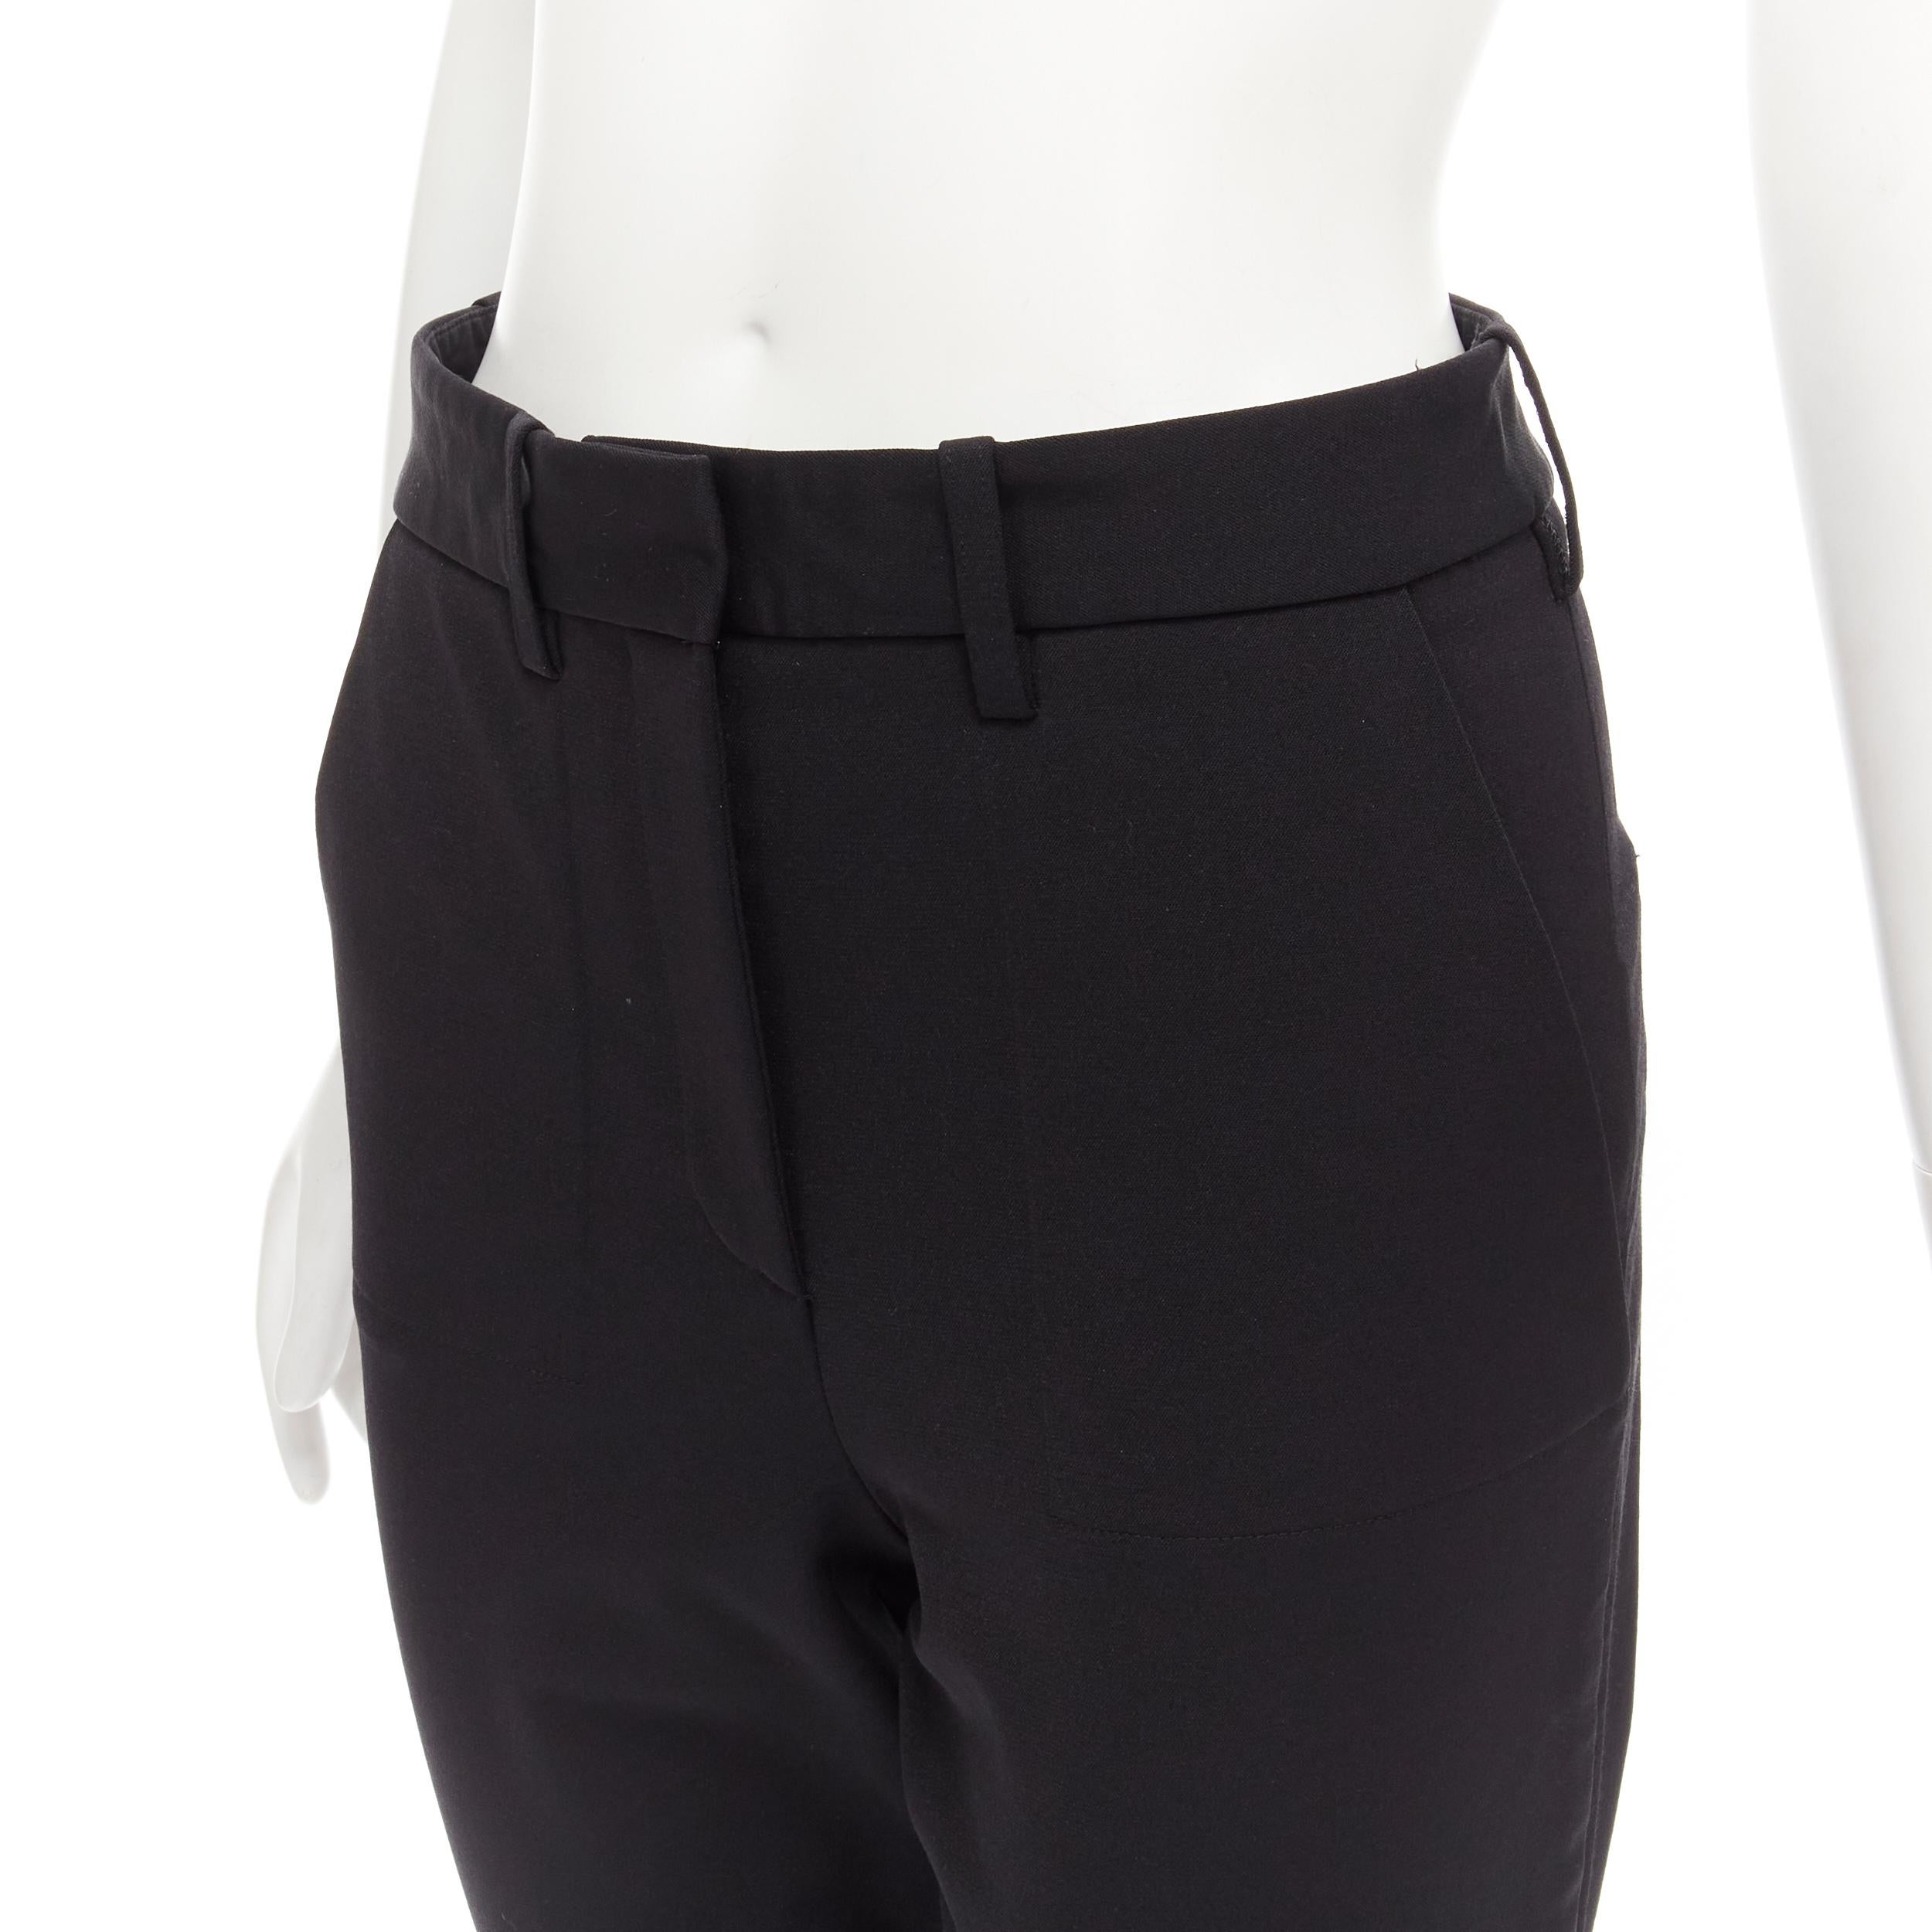 VICTORIA BEKHAM black stiff structured heavy fabric skinny pants UK10 M For Sale 1